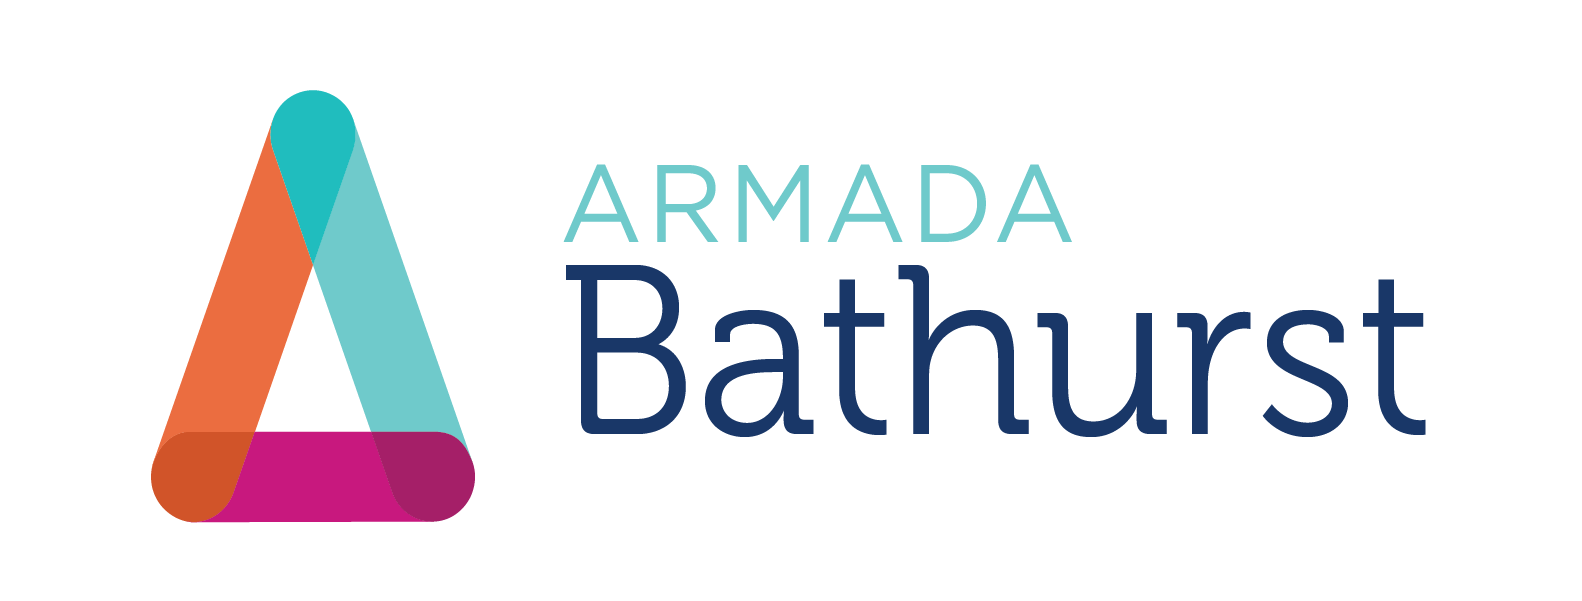 Armada-Bathurst-Primary-logo-CYMK.png